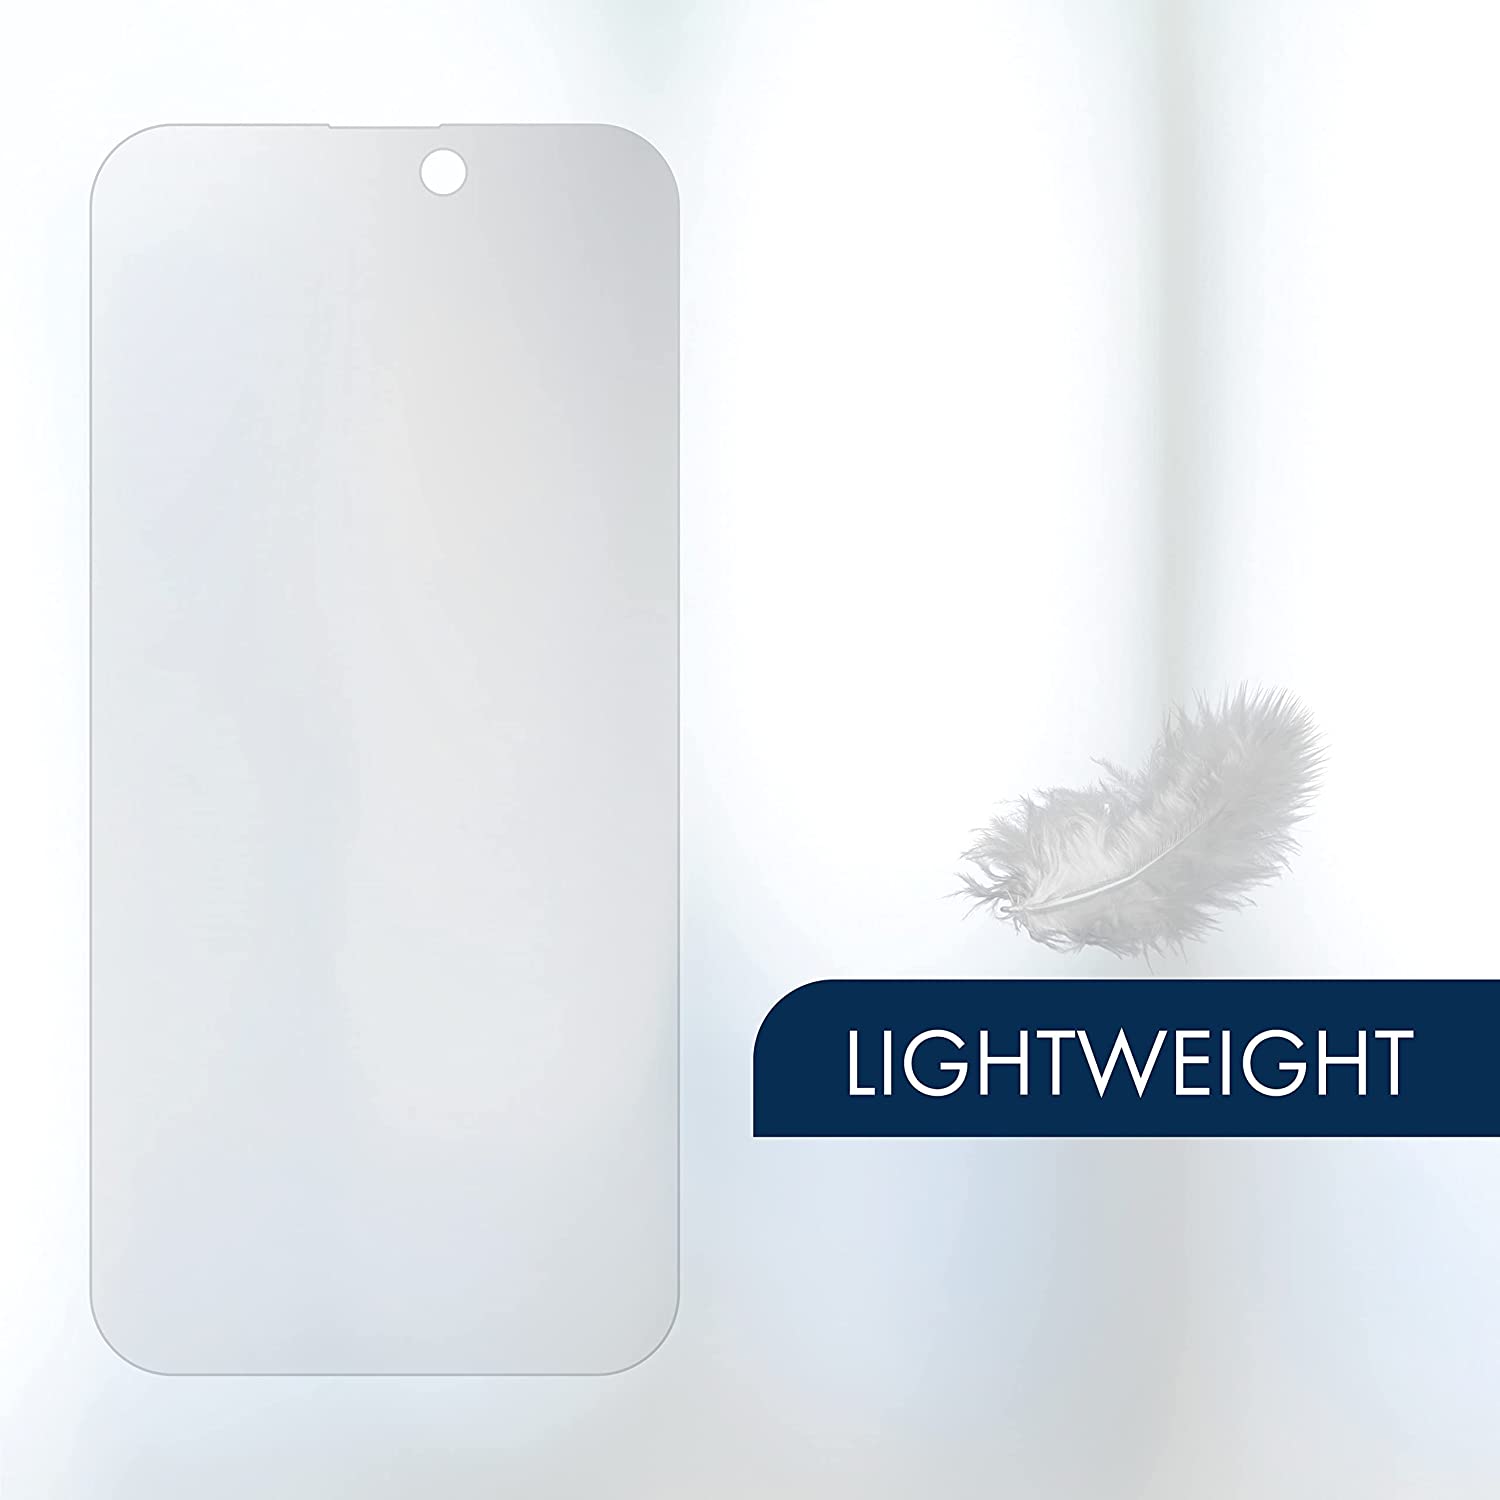 [2 Pack] LG Optimus F3 (LS720 / VM720) (Virgin Mobile / Sprint) Screen Protector